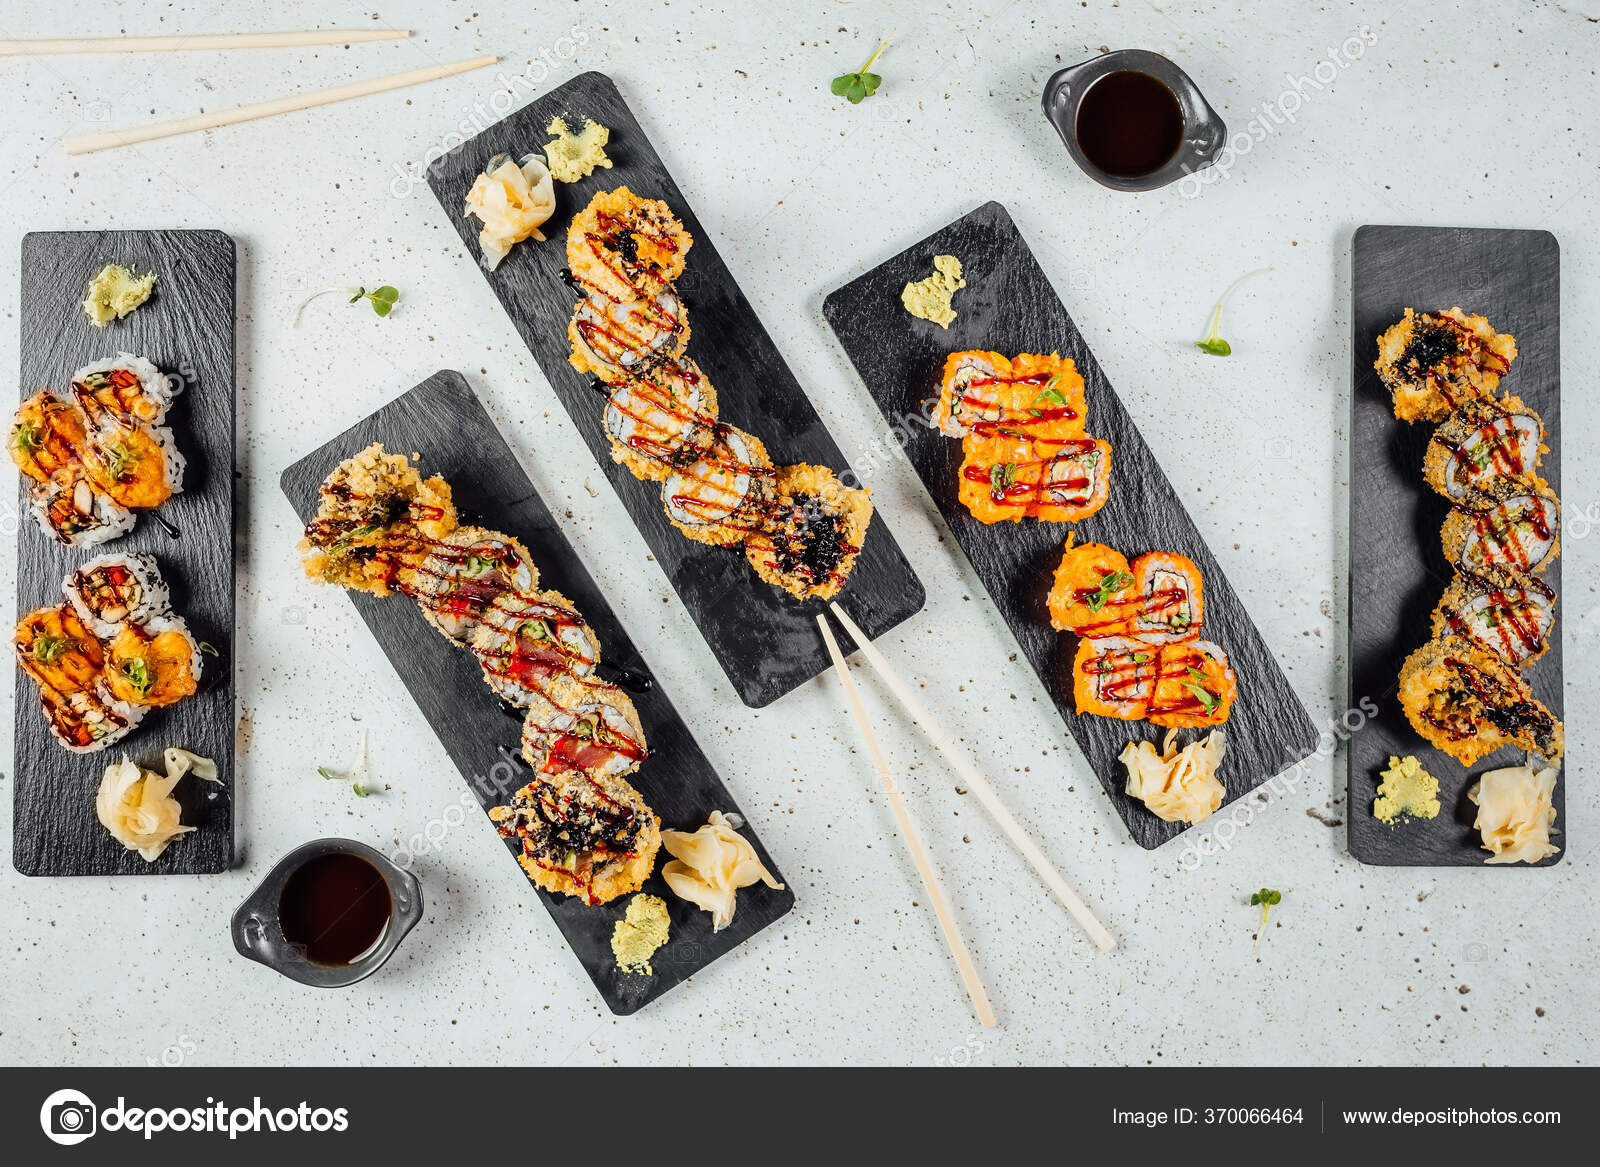 https://st3.depositphotos.com/28053878/37006/i/1600/depositphotos_370066464-stock-photo-top-view-set-sushi-rolls.jpg